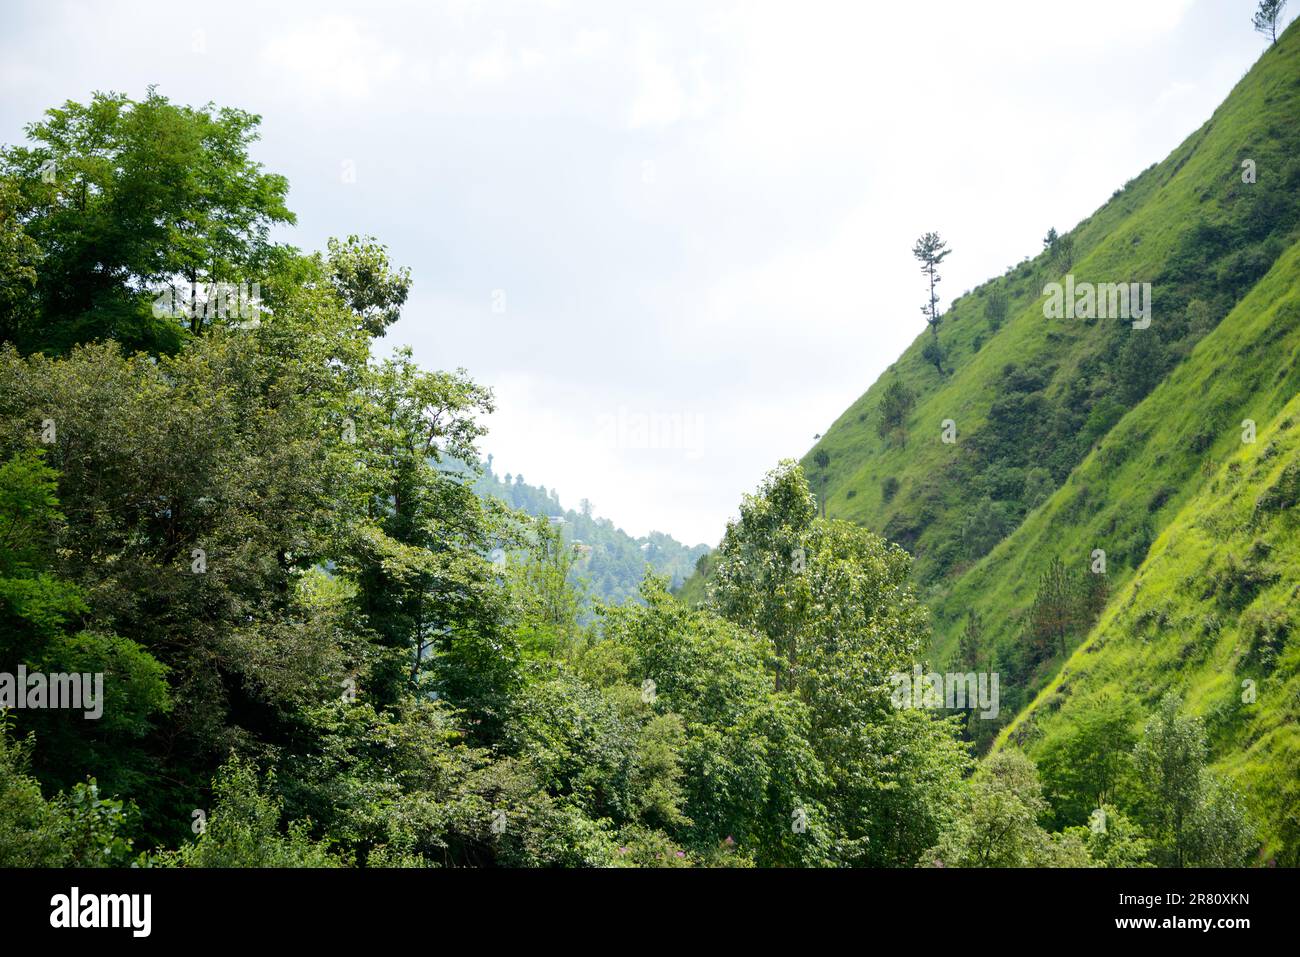 Berge und Vellay in Nathia Gali, Abbottabad, Pakistan. Stockfoto